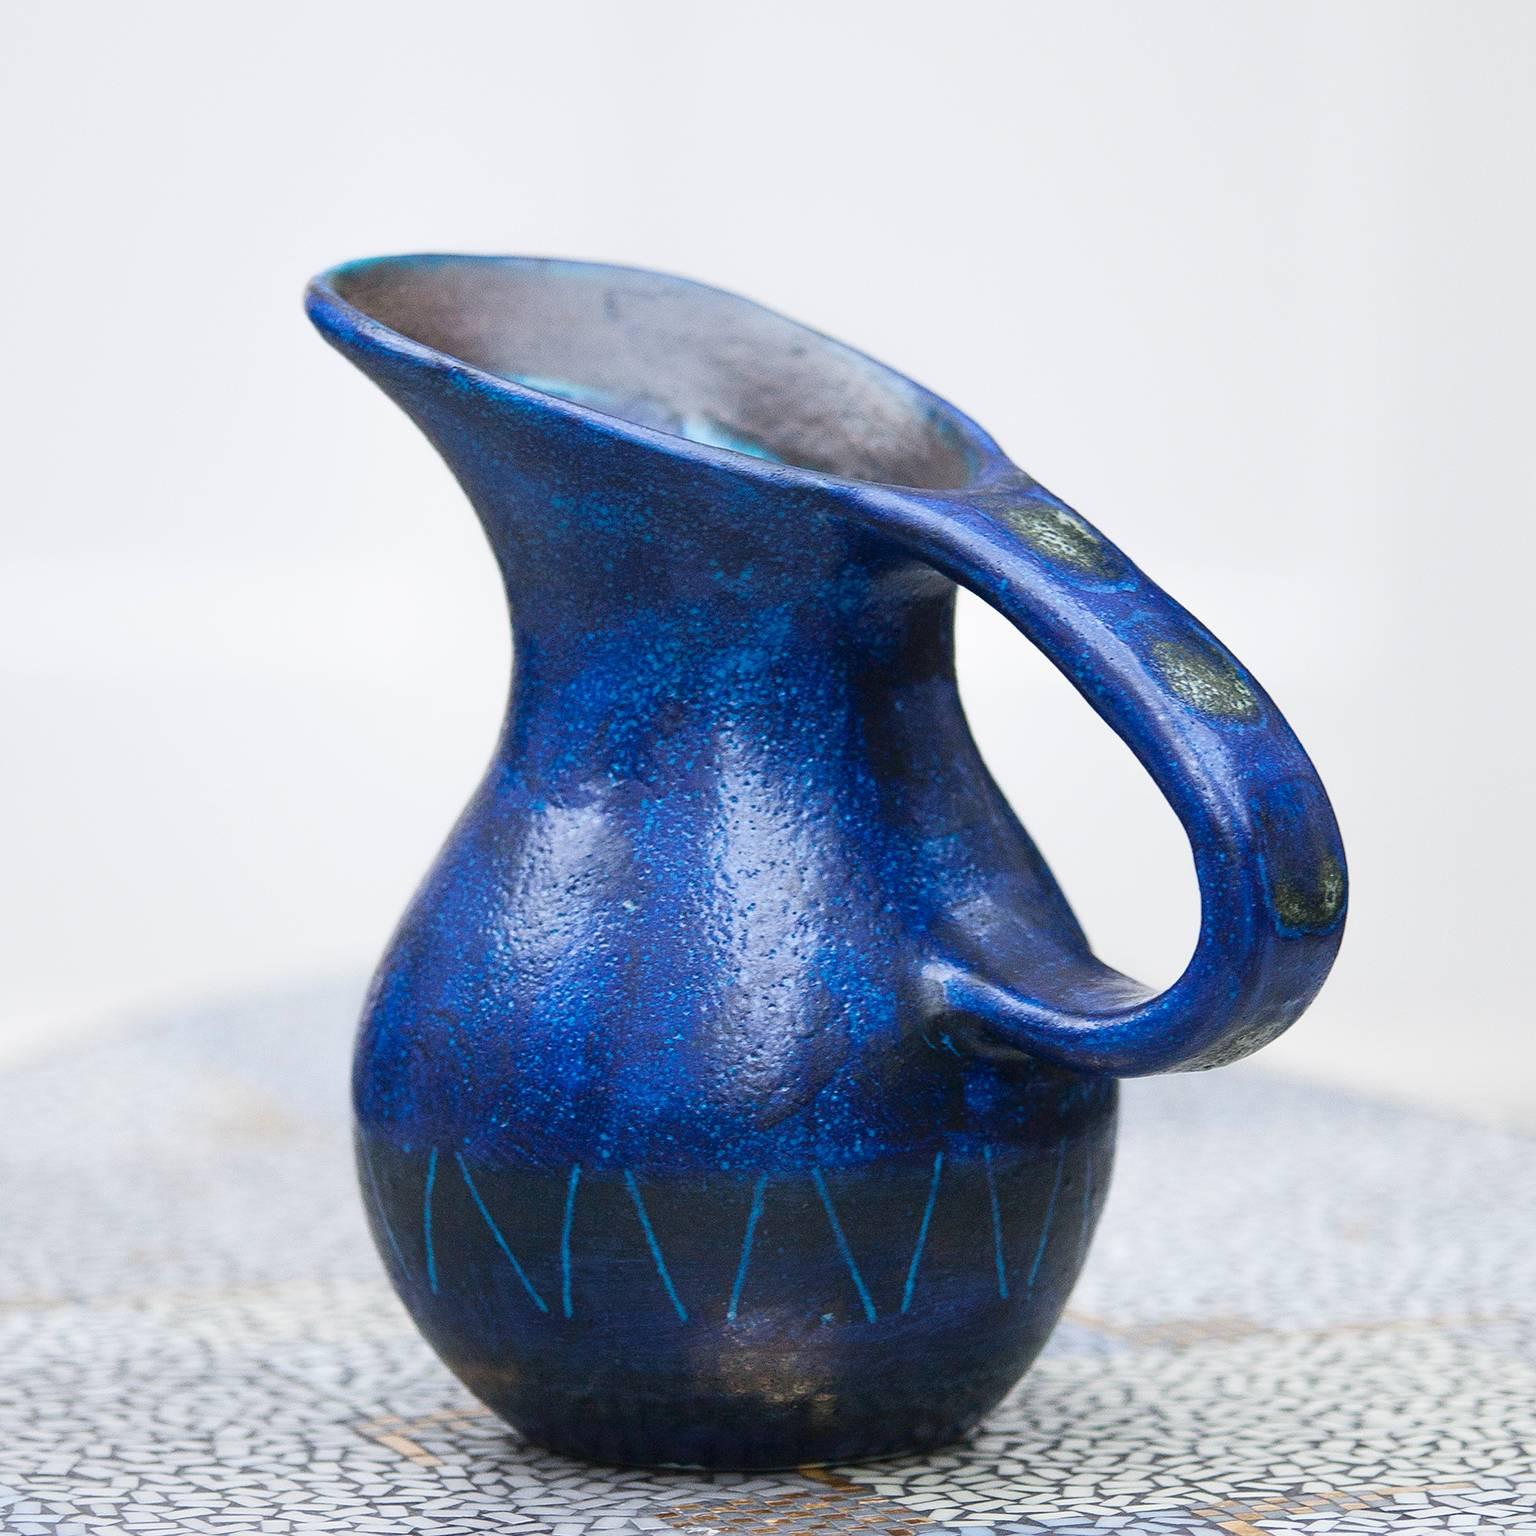 Bruno Gambone ceramic pitcher in blue glazed ceramic, Italy from 1958.
Measures: H 23 x B 22 x D 15 cm.